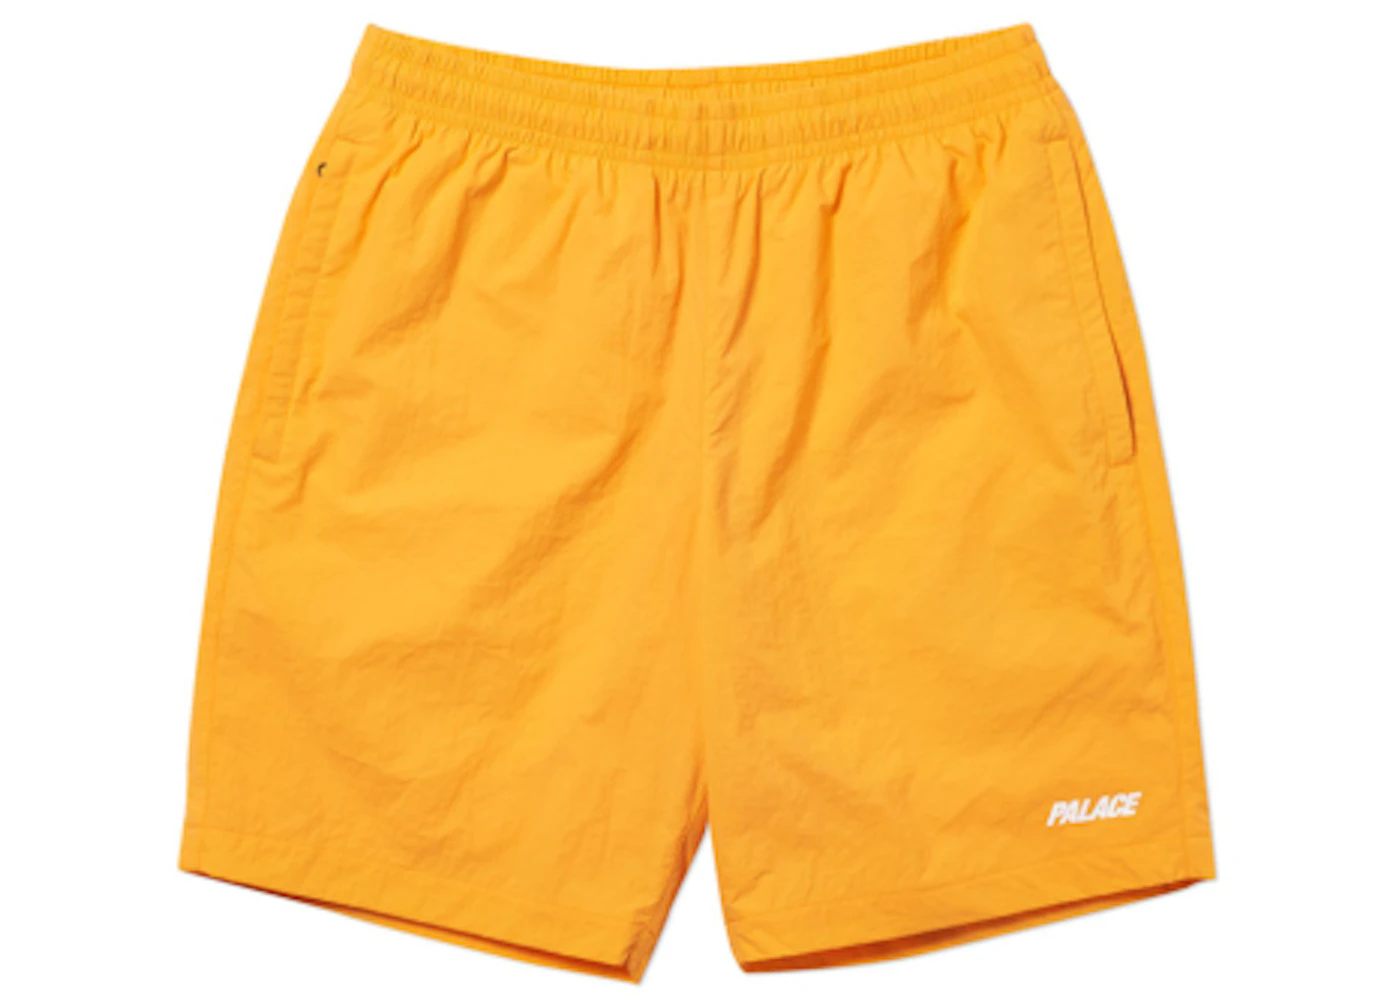 Palace Shell Shorts Orange Men's - SS19 - US